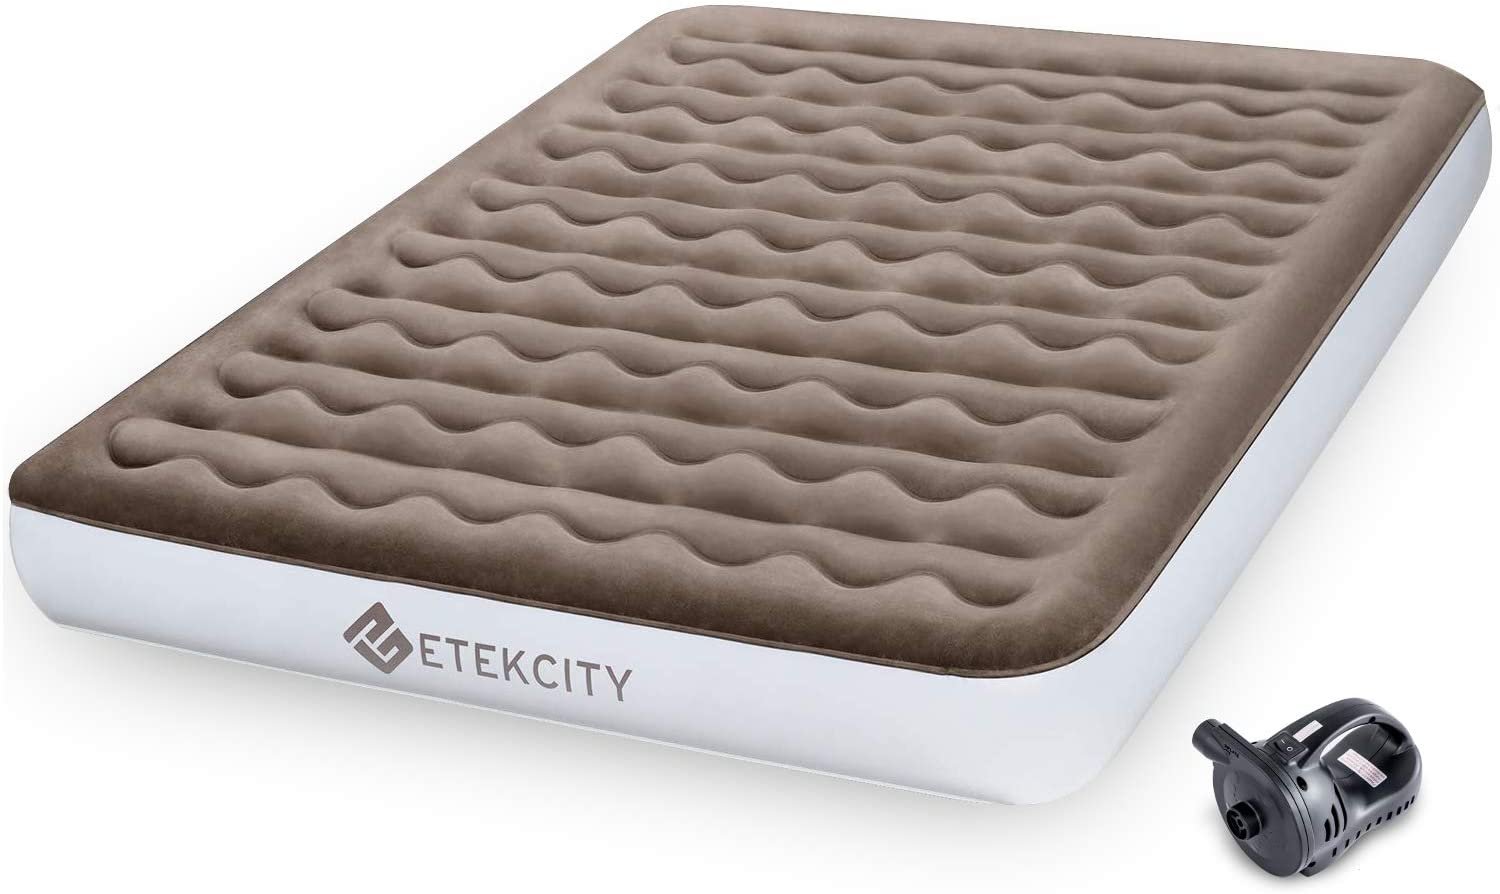 etekcity upgraded camping air mattress